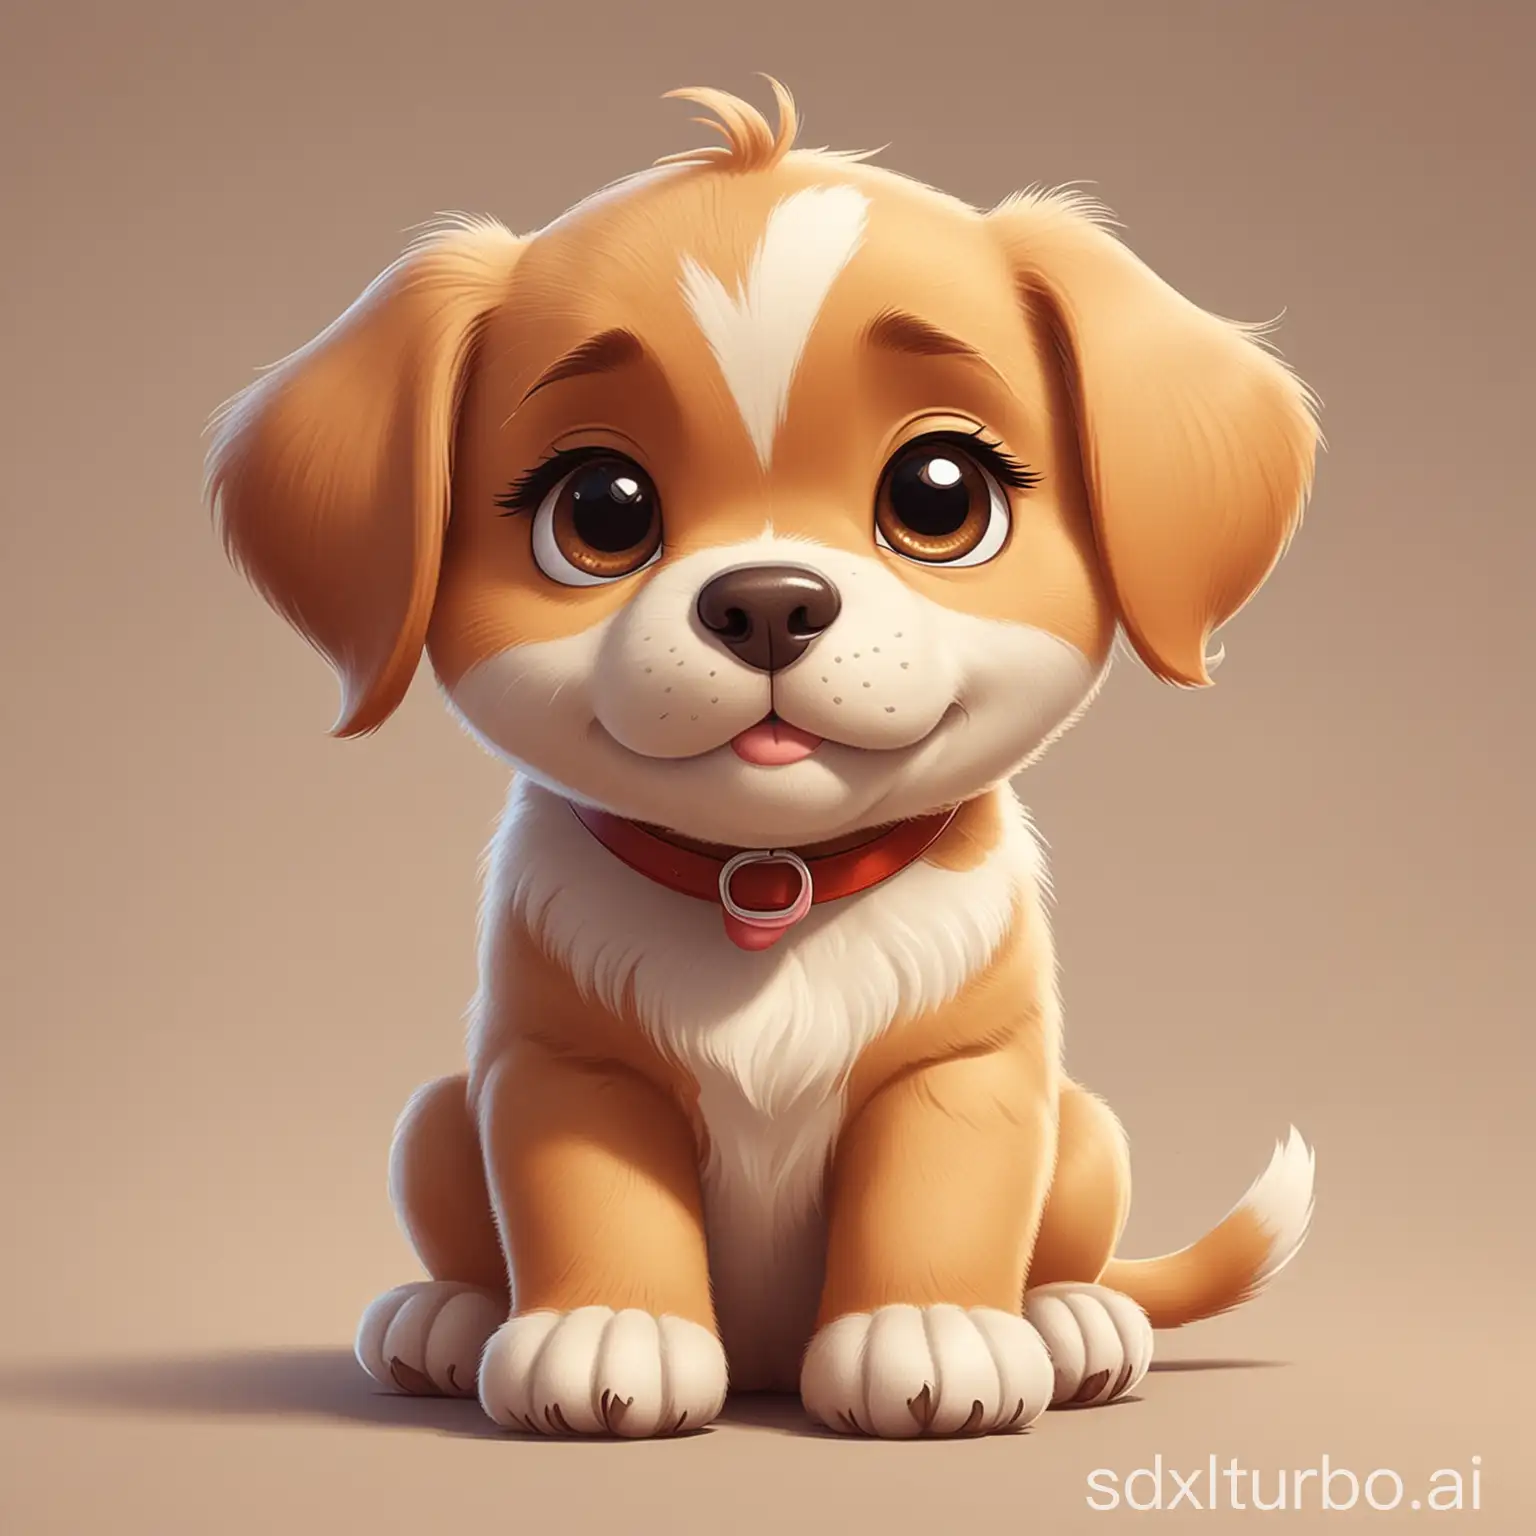 a cute puppy, cartoon style